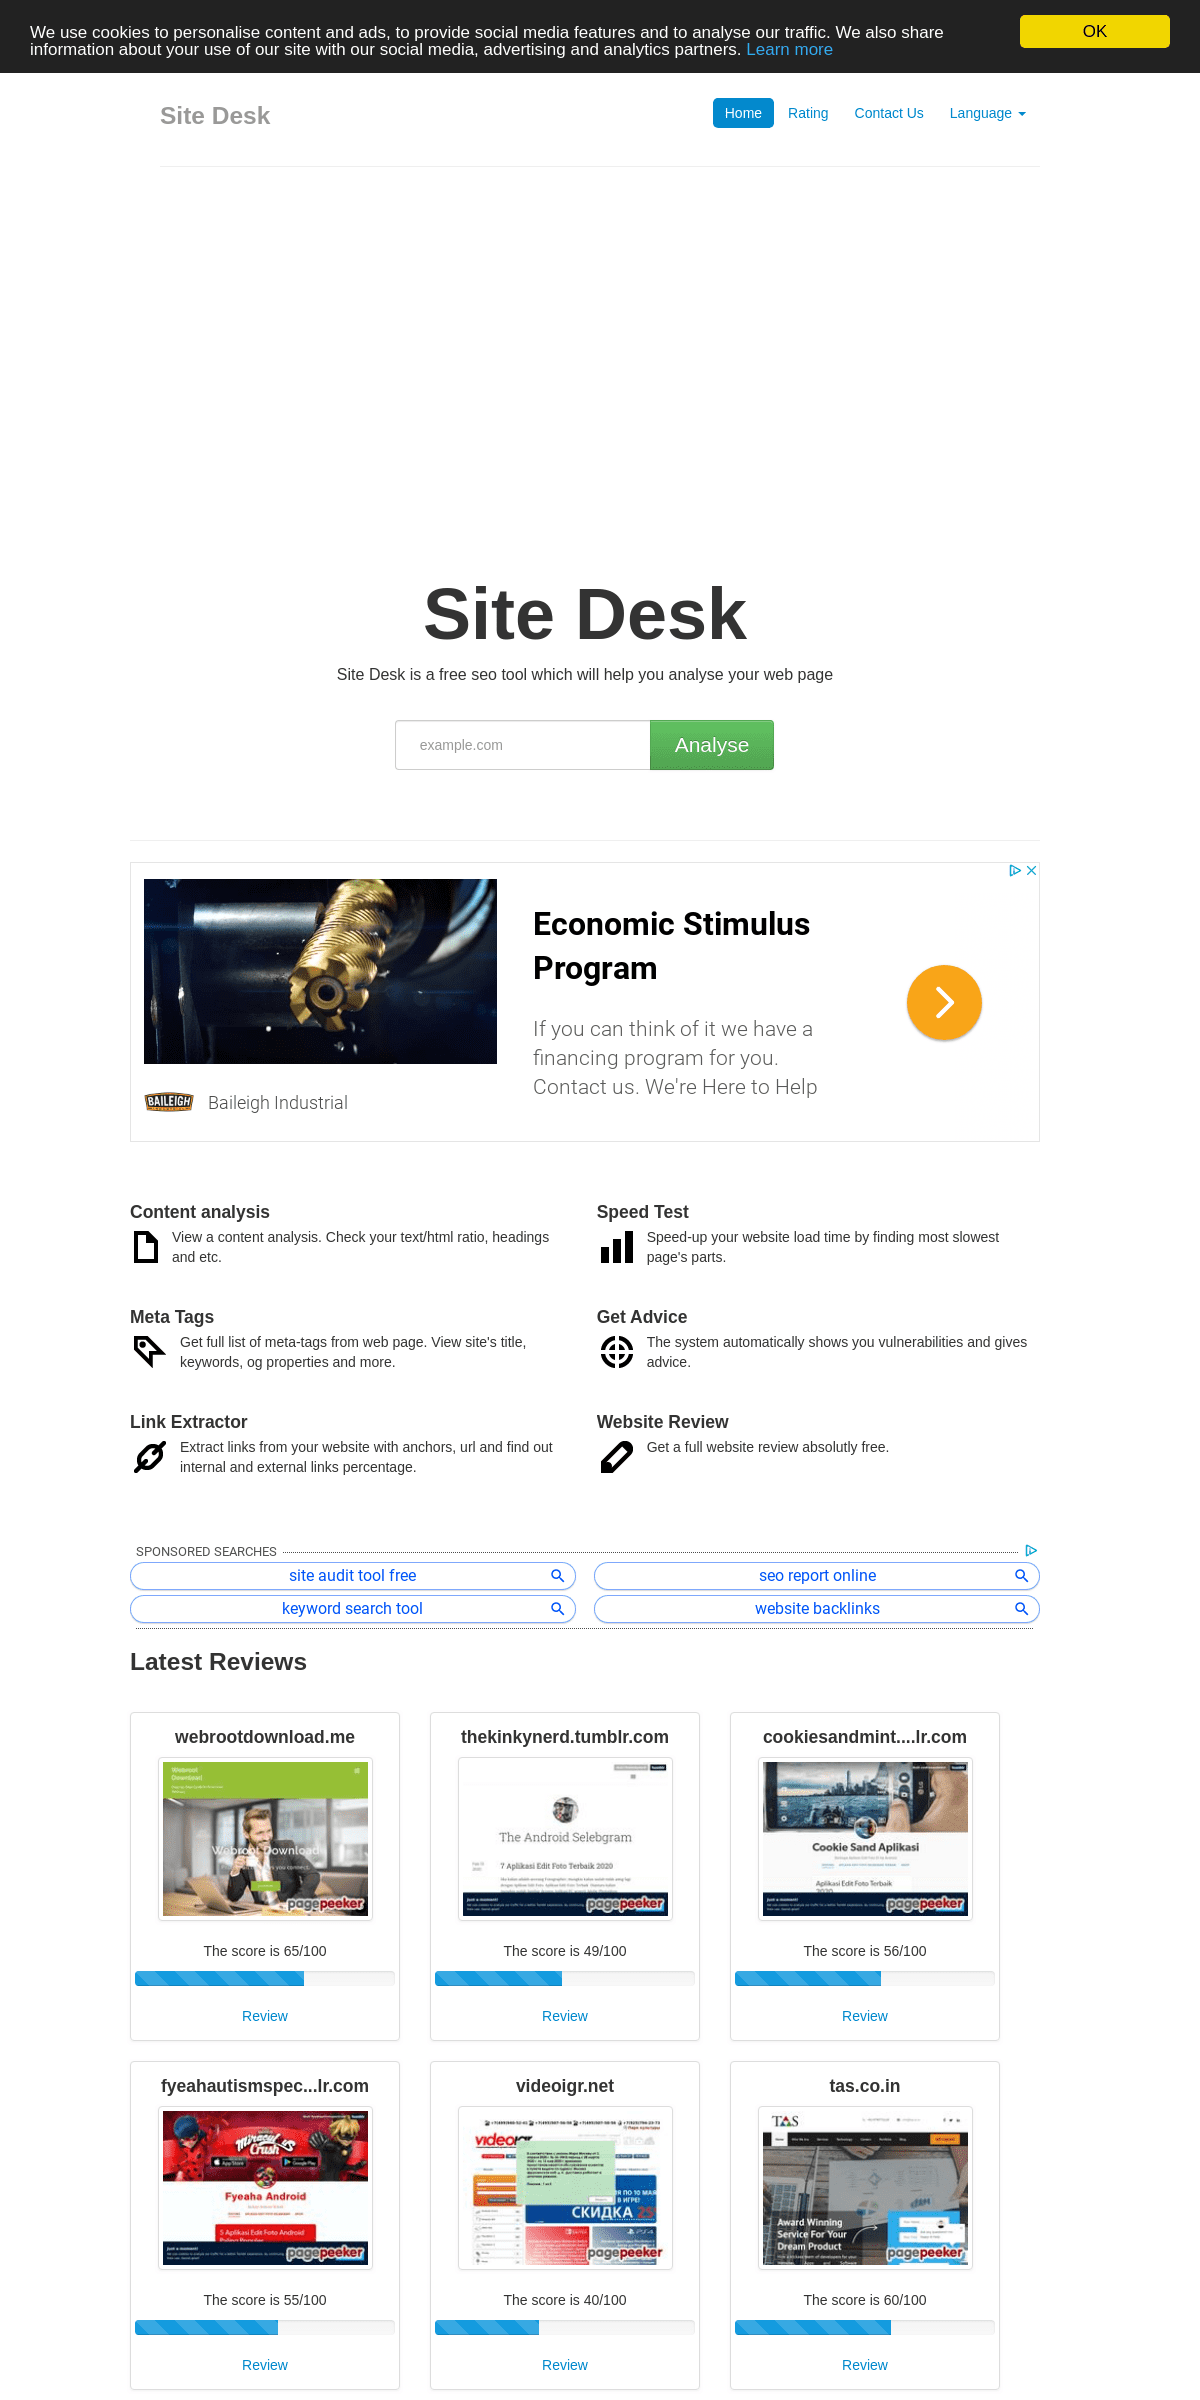 A complete backup of sitedesk.net